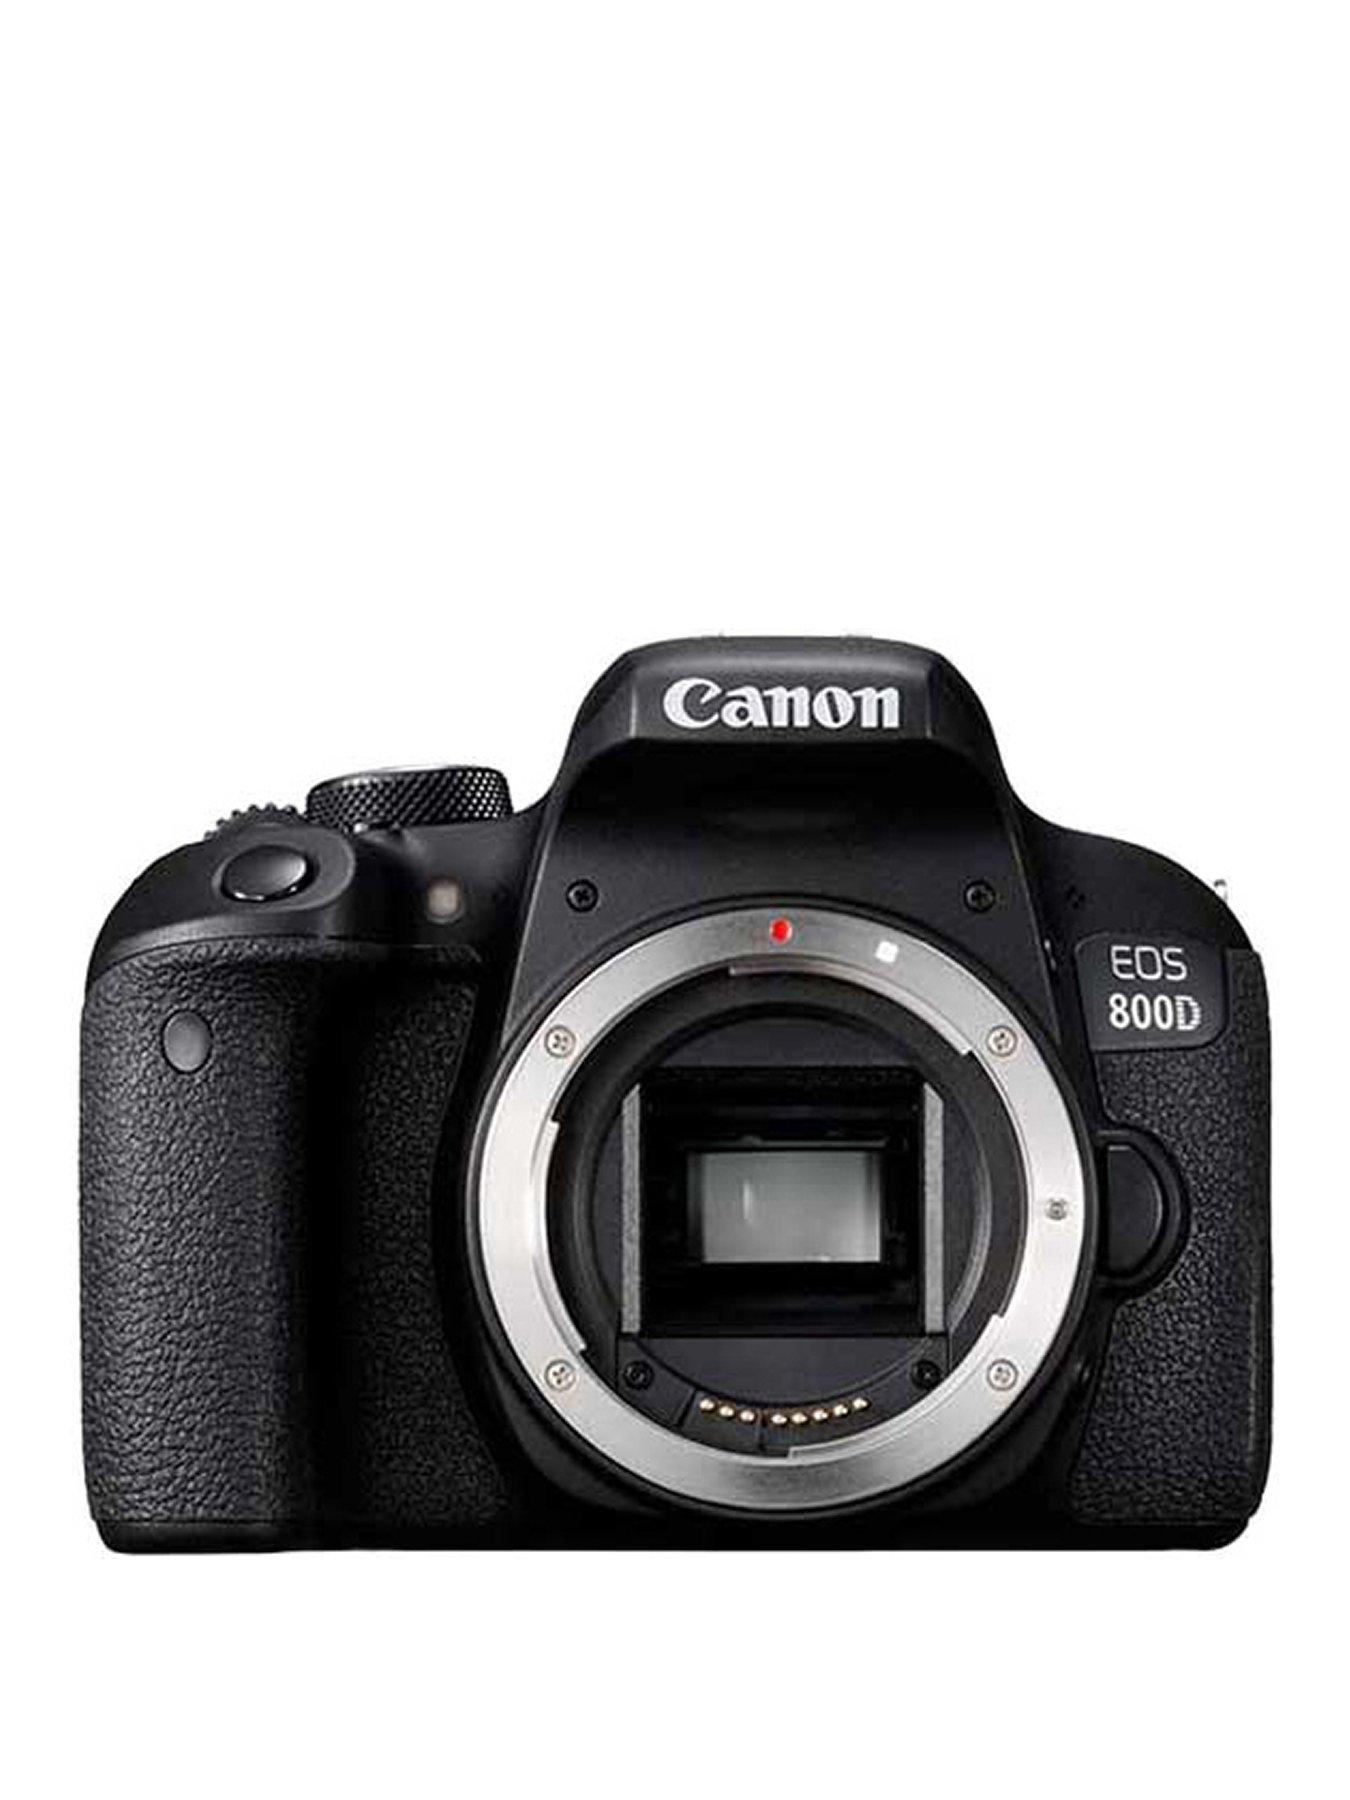 Canon Eos 800D Slr Camera Body Only – Black